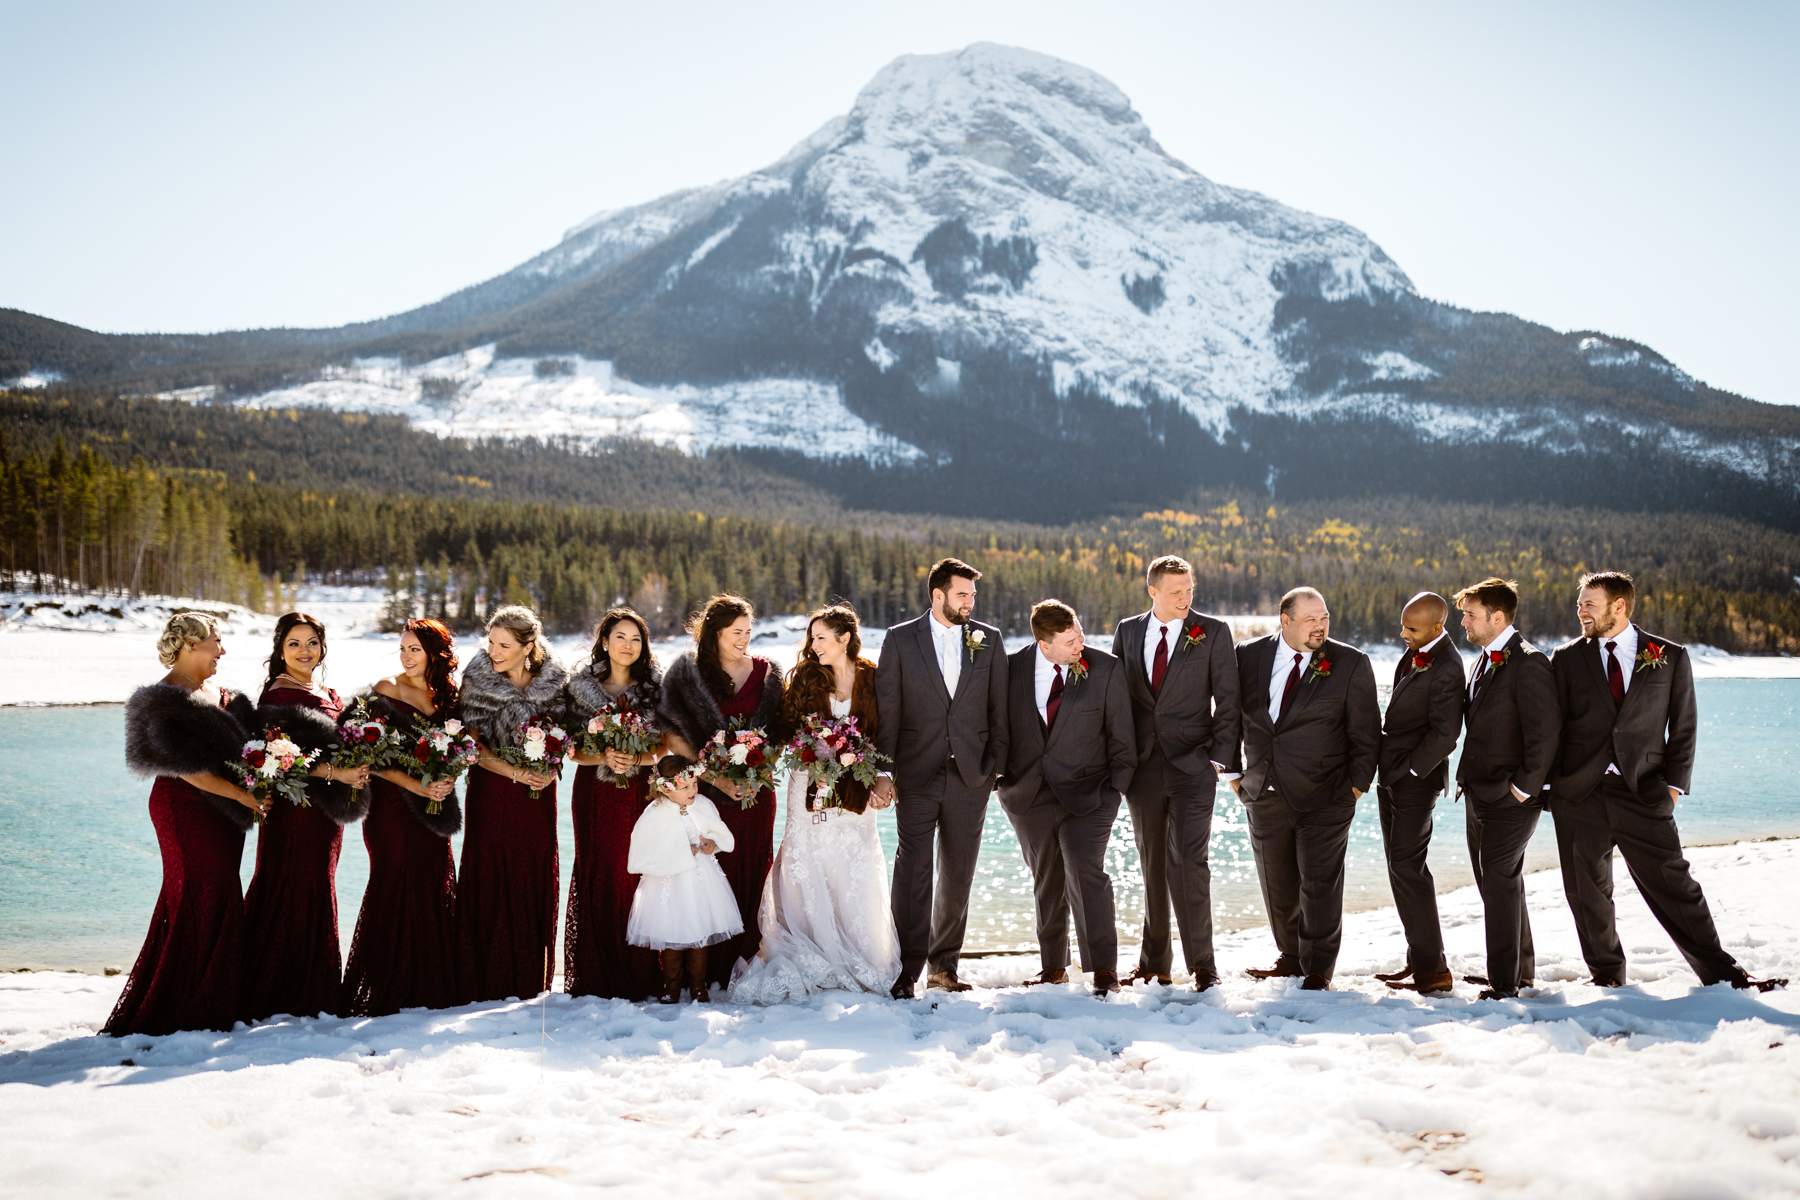 Camp Chief Hector Wedding Photography Near Calgary - Image 15